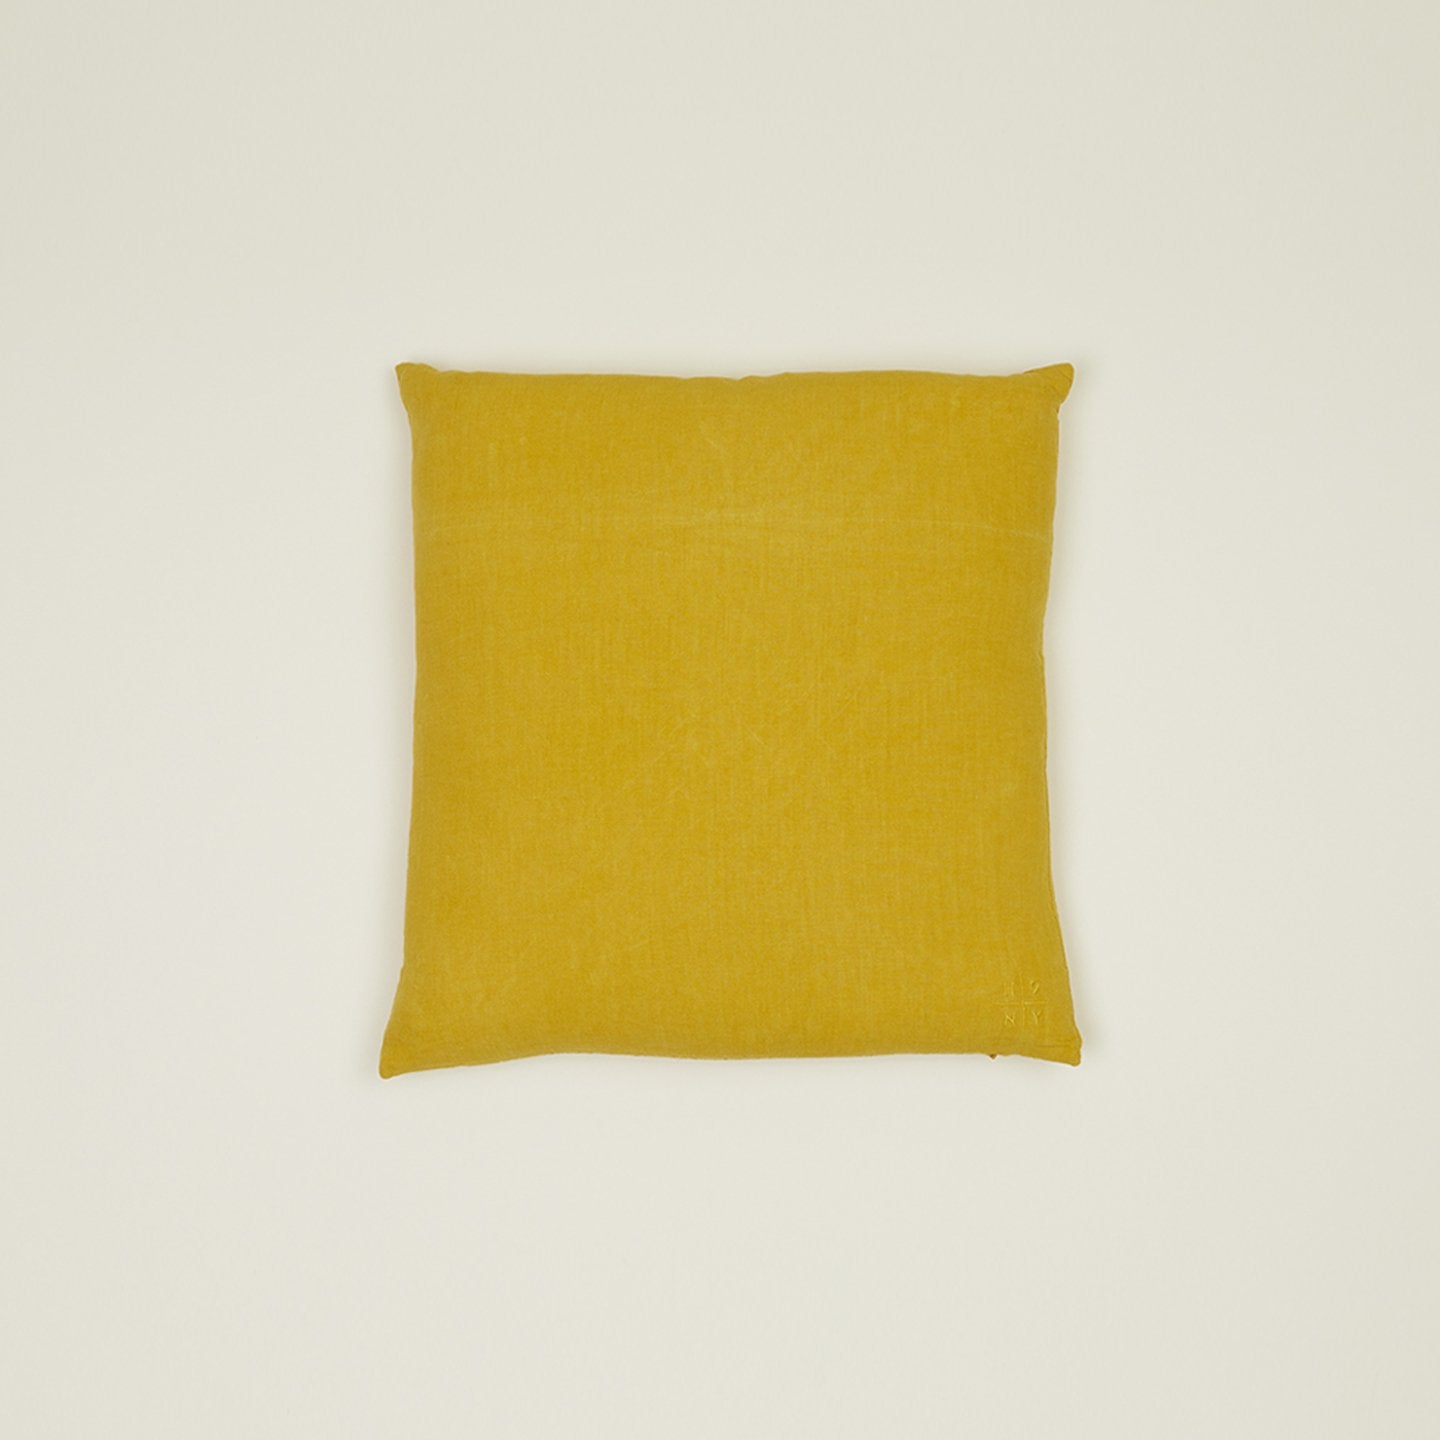 Hawkins New York | Simple Linen Cushion: 18" x 18"